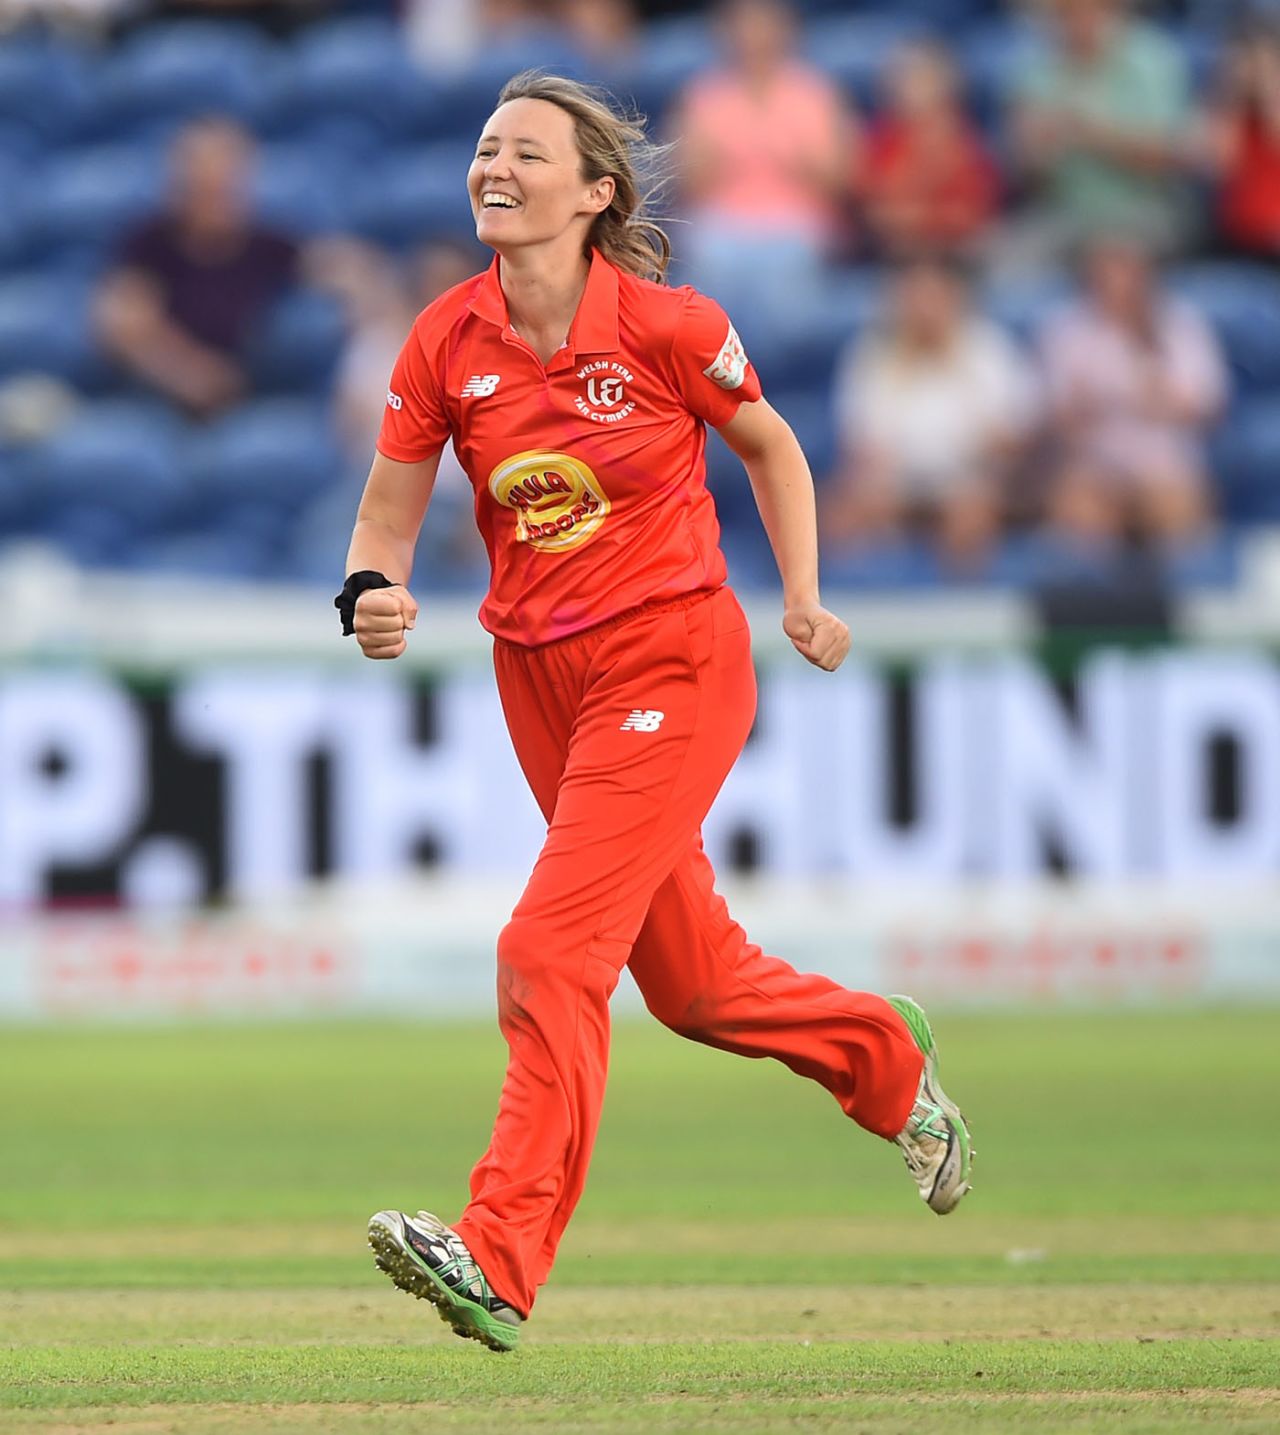 Nicole Harvey celebrates the wicket of Sophia Dunkley, Welsh Fire vs Southern Brave, The Hundred, Sophia Gardens, July 27, 2021